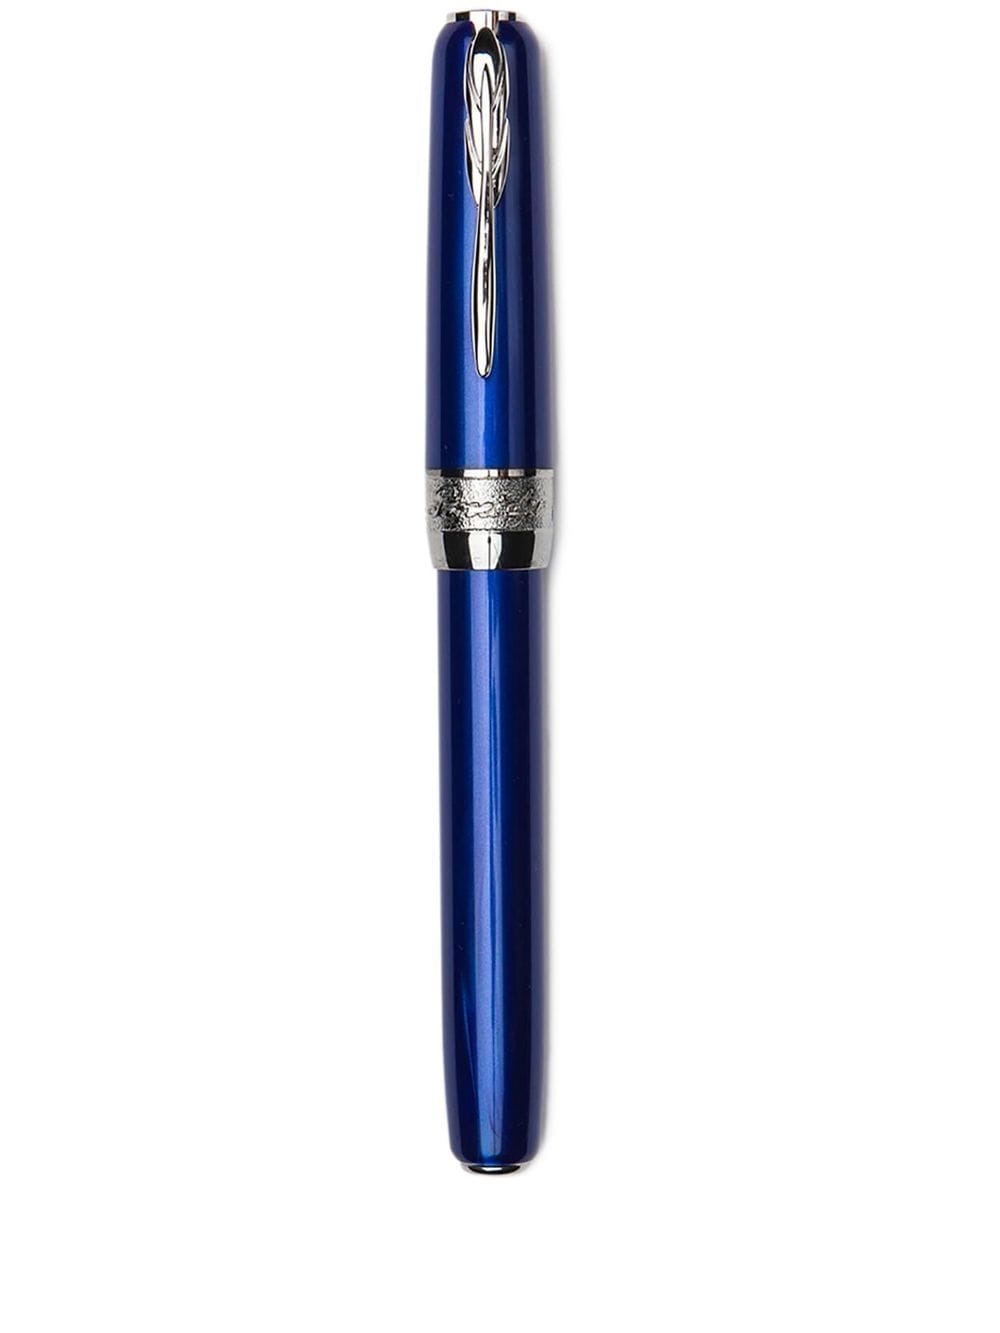 Pineider full metal jacket roller pen - Blue